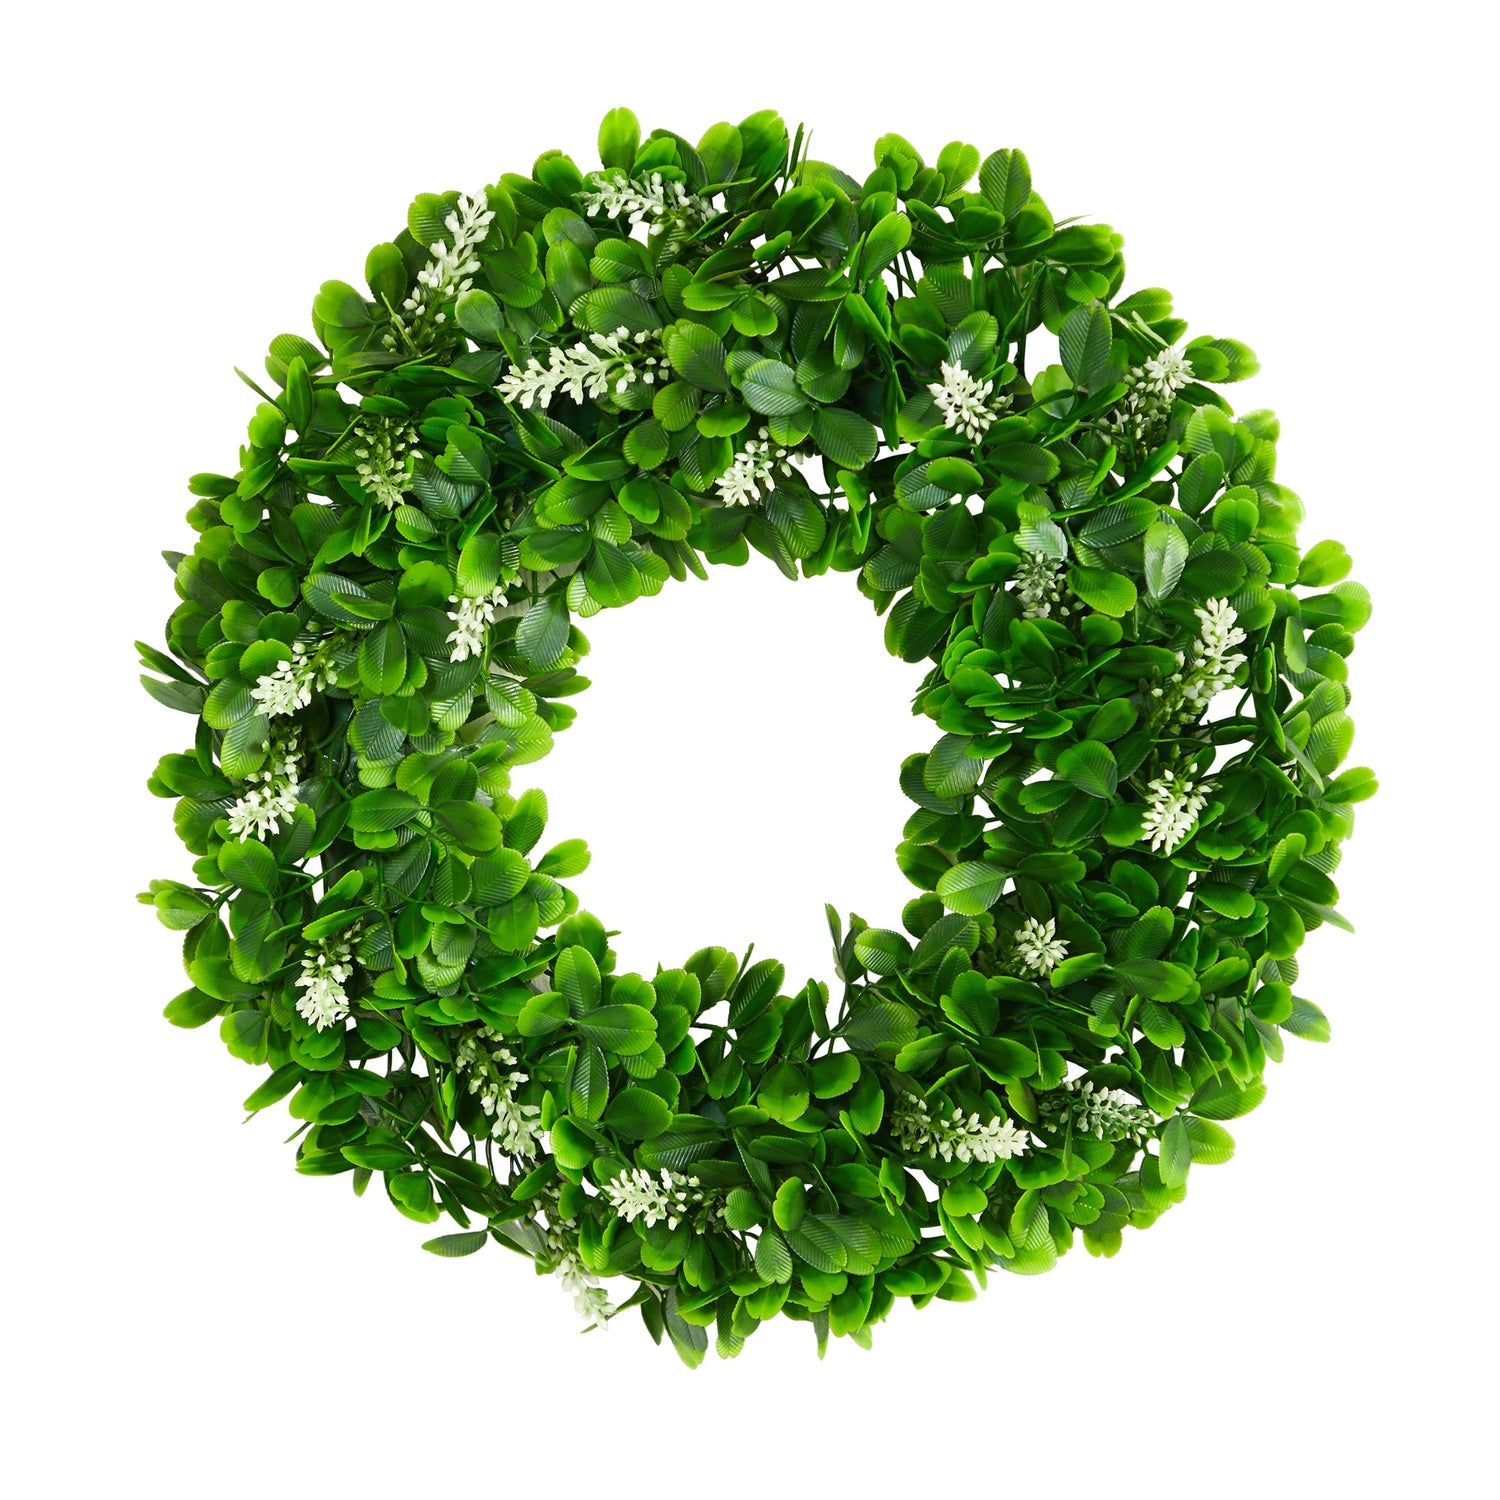 13” Jasmine Artificial Wreath